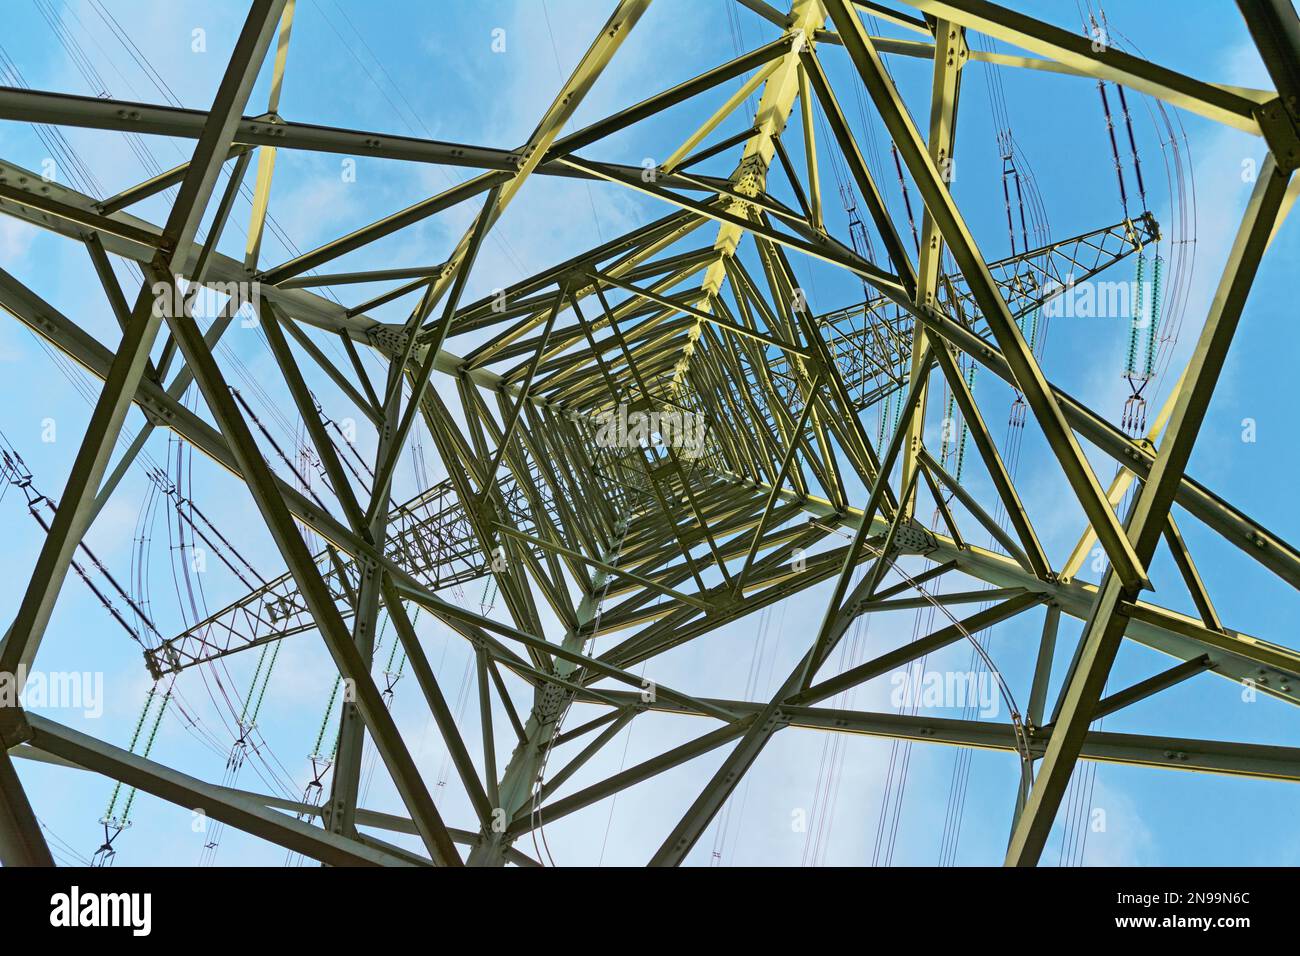 Strommast in Froschperspektive von innen. Electricity pylon in a frog's eye view from the inside Stock Photo